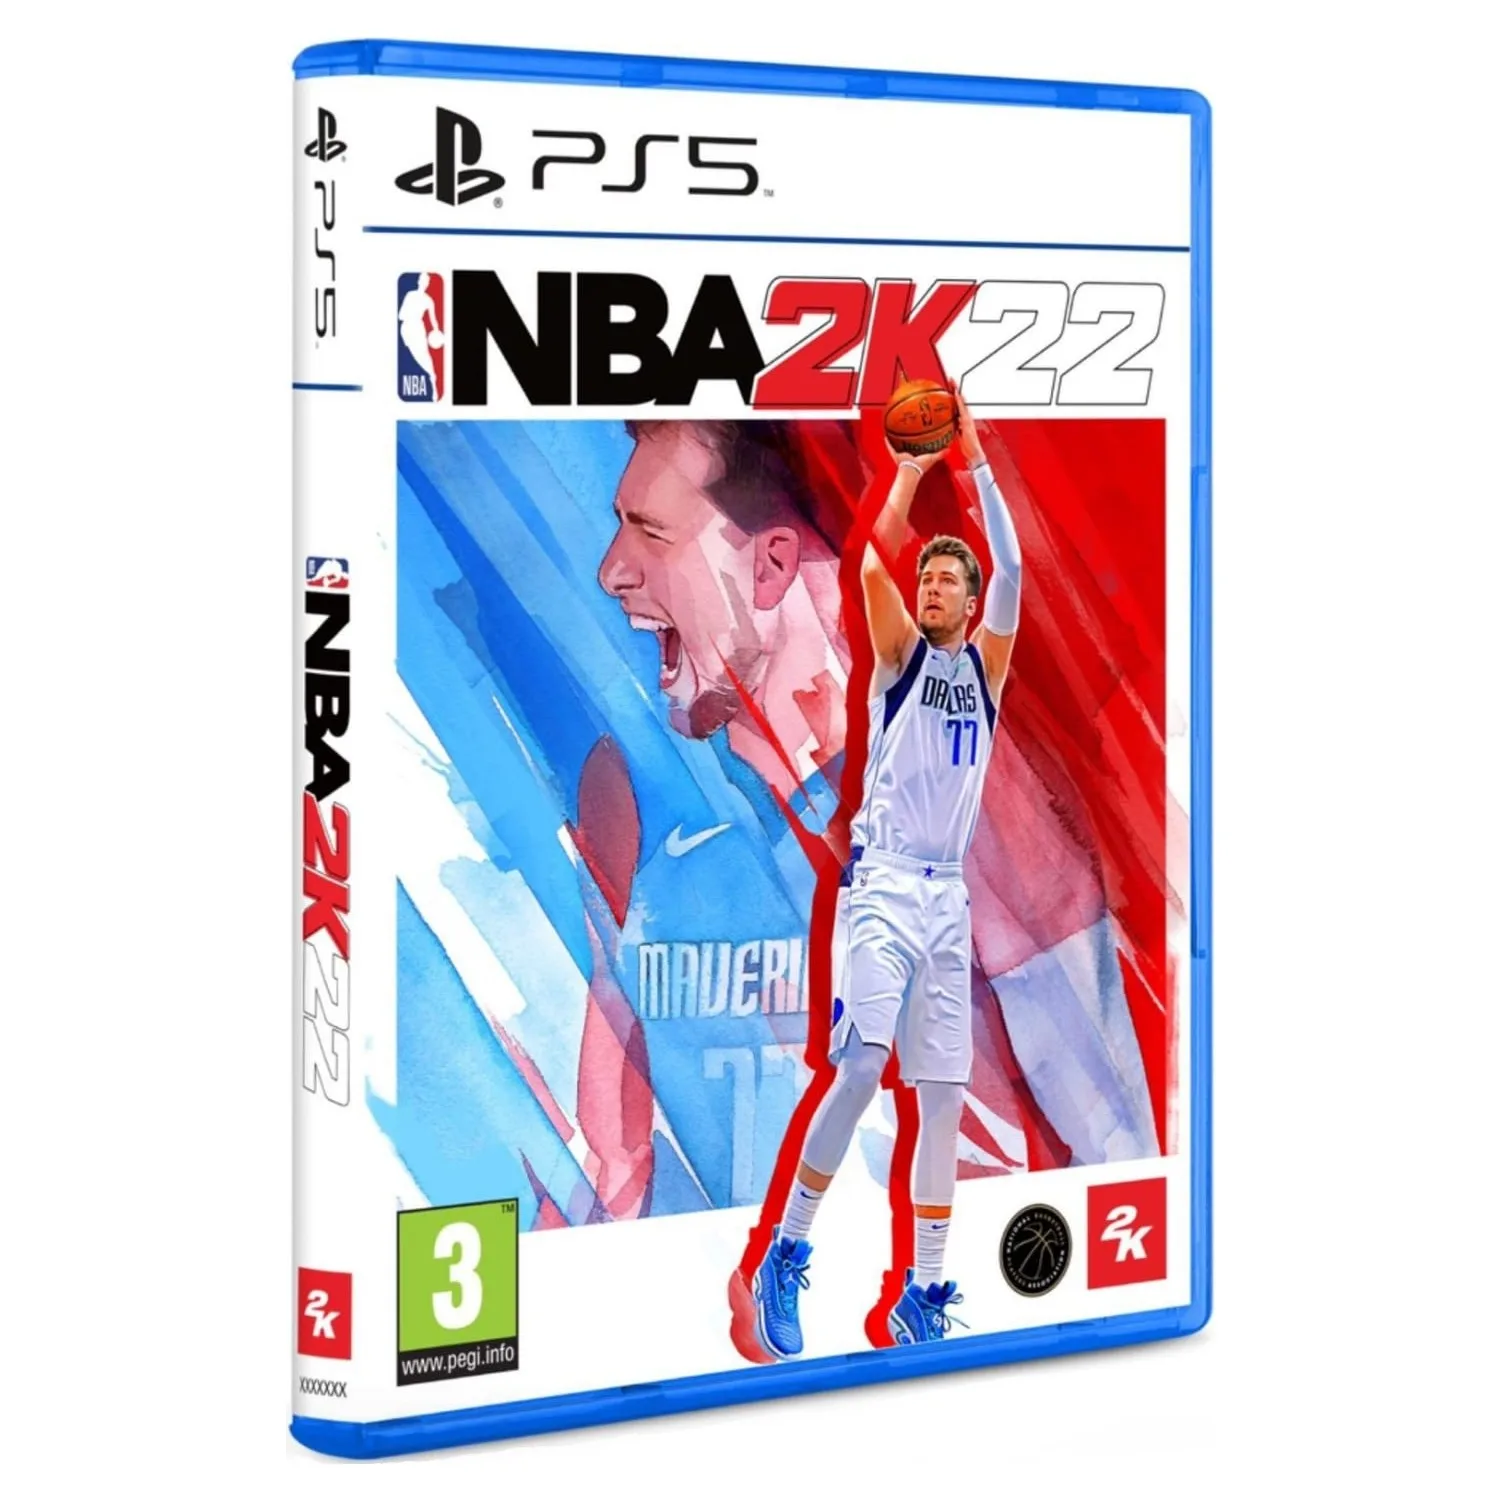 

NBA 2K22 PS5 Playstation 5 Closed Case Original CD Game